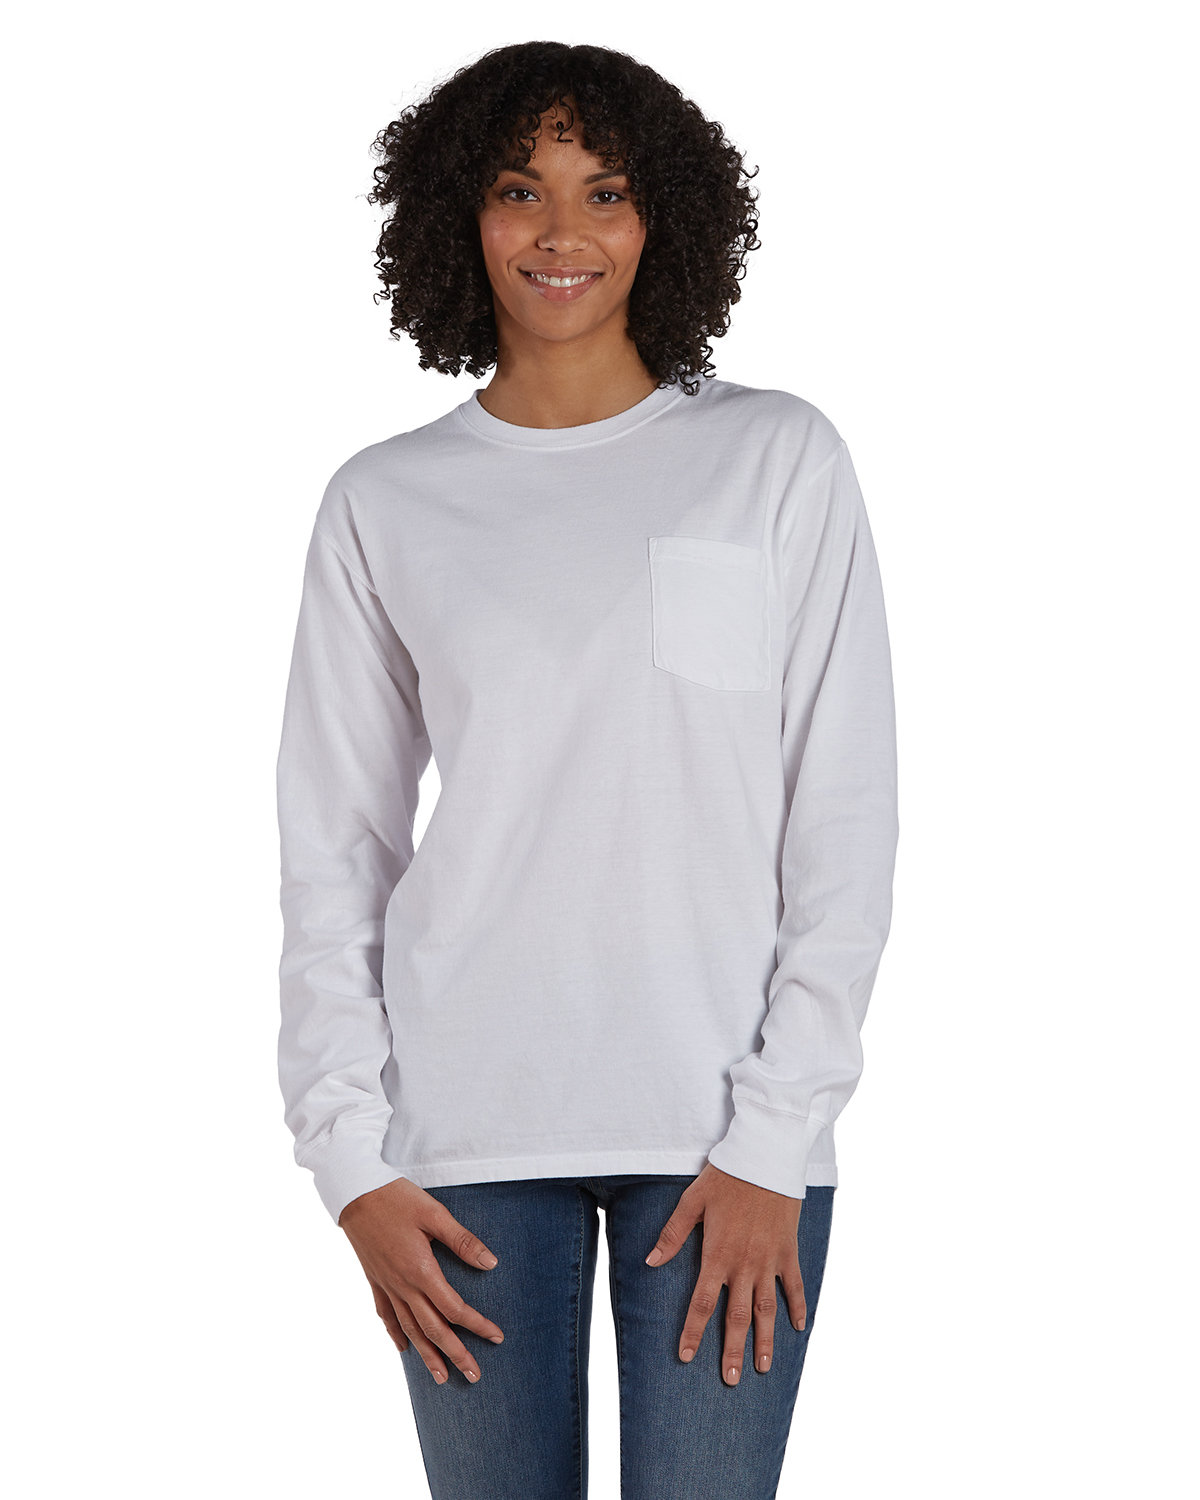 Unisex Garment-Dyed Long-Sleeve T-Shirt With Pocket-